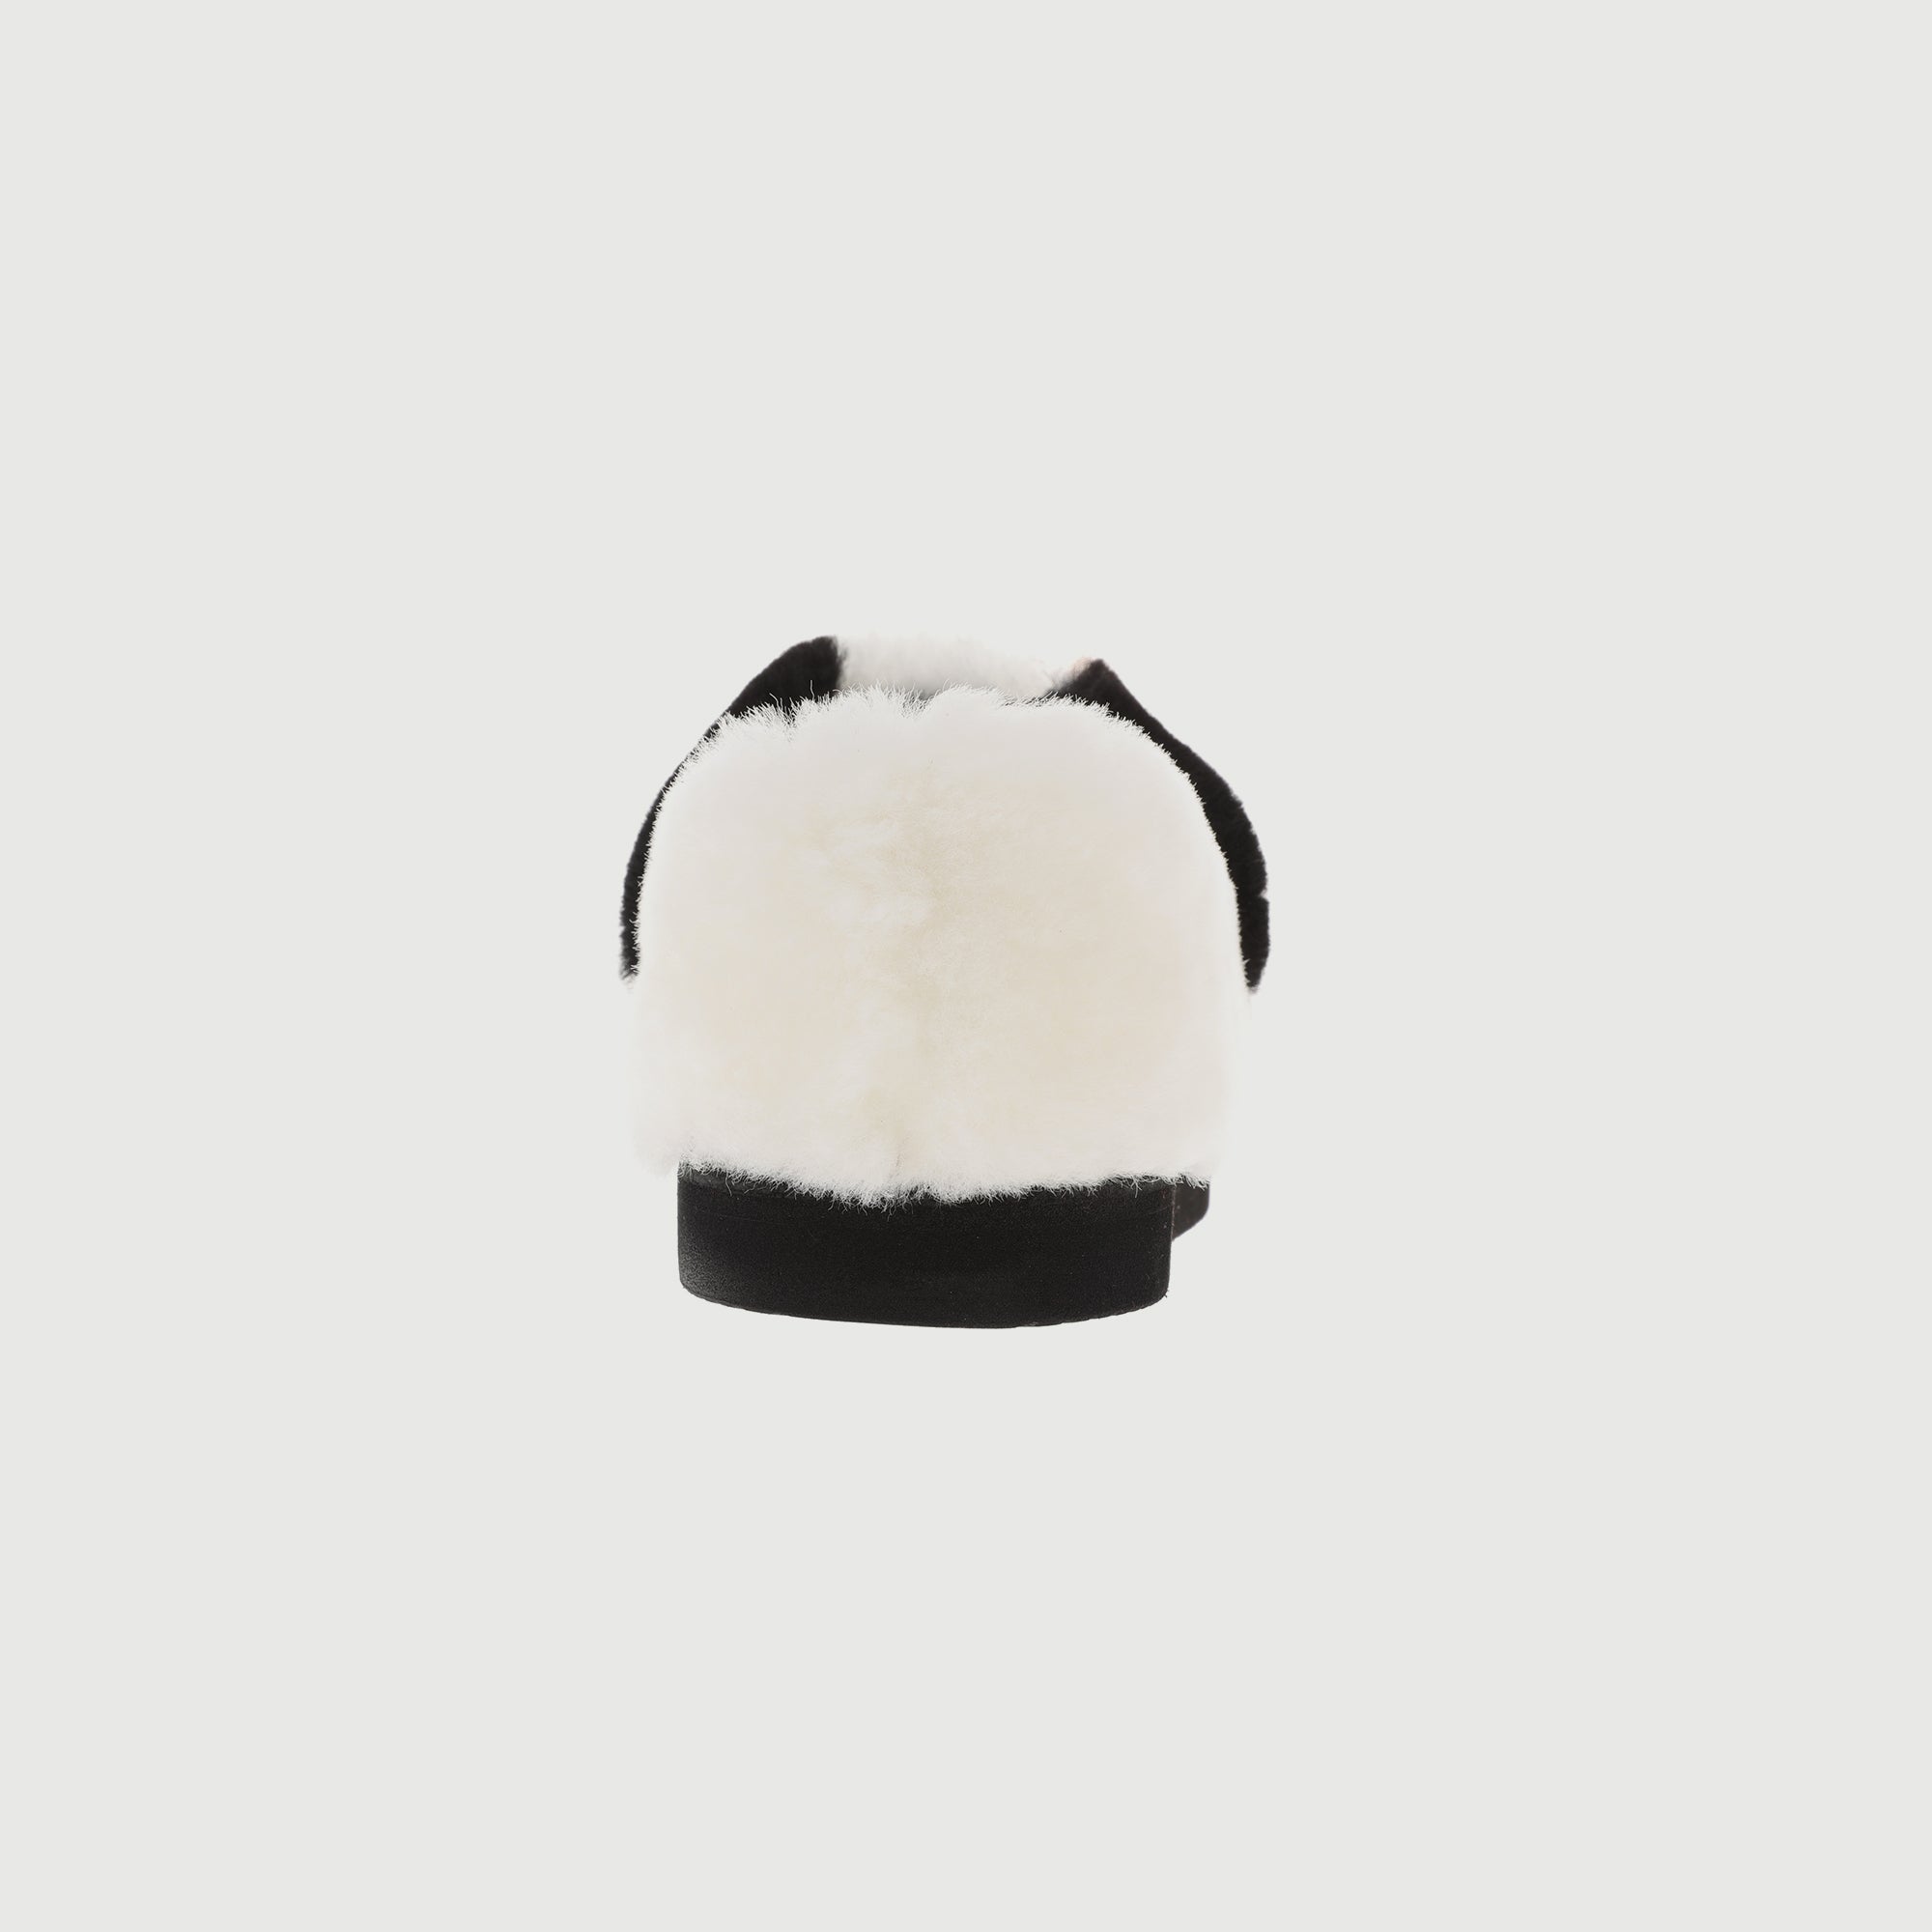 Thick Wool Slippers Panda